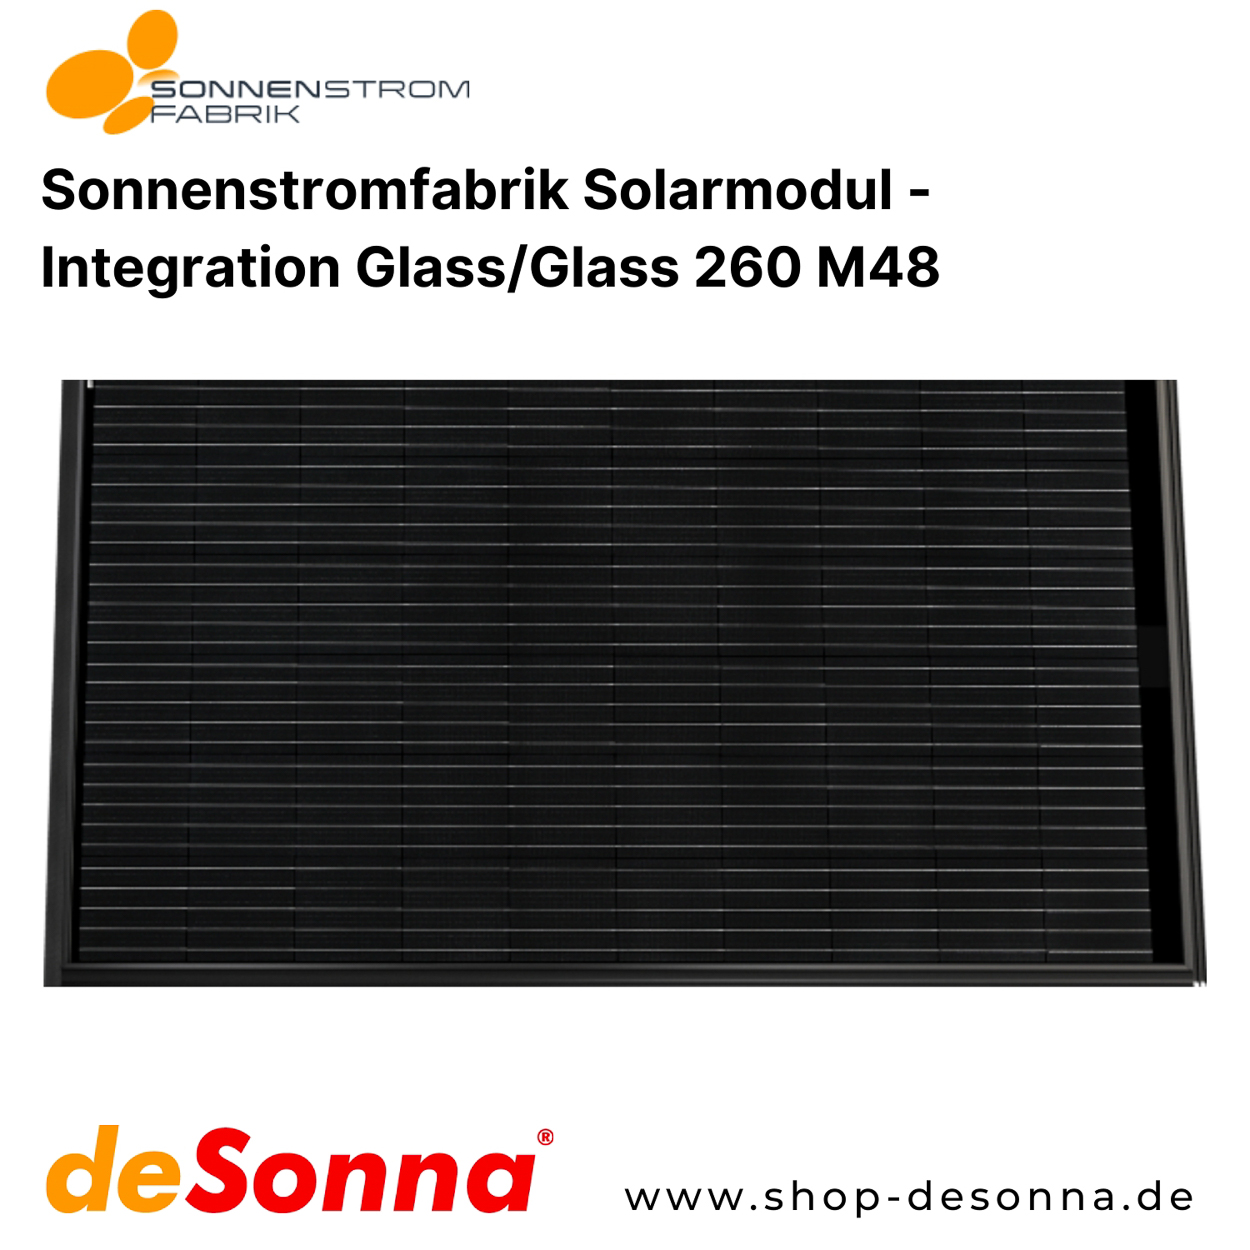 Sonnenstromfabrik Solarmodul - Integration Glass/Glass 260 M48